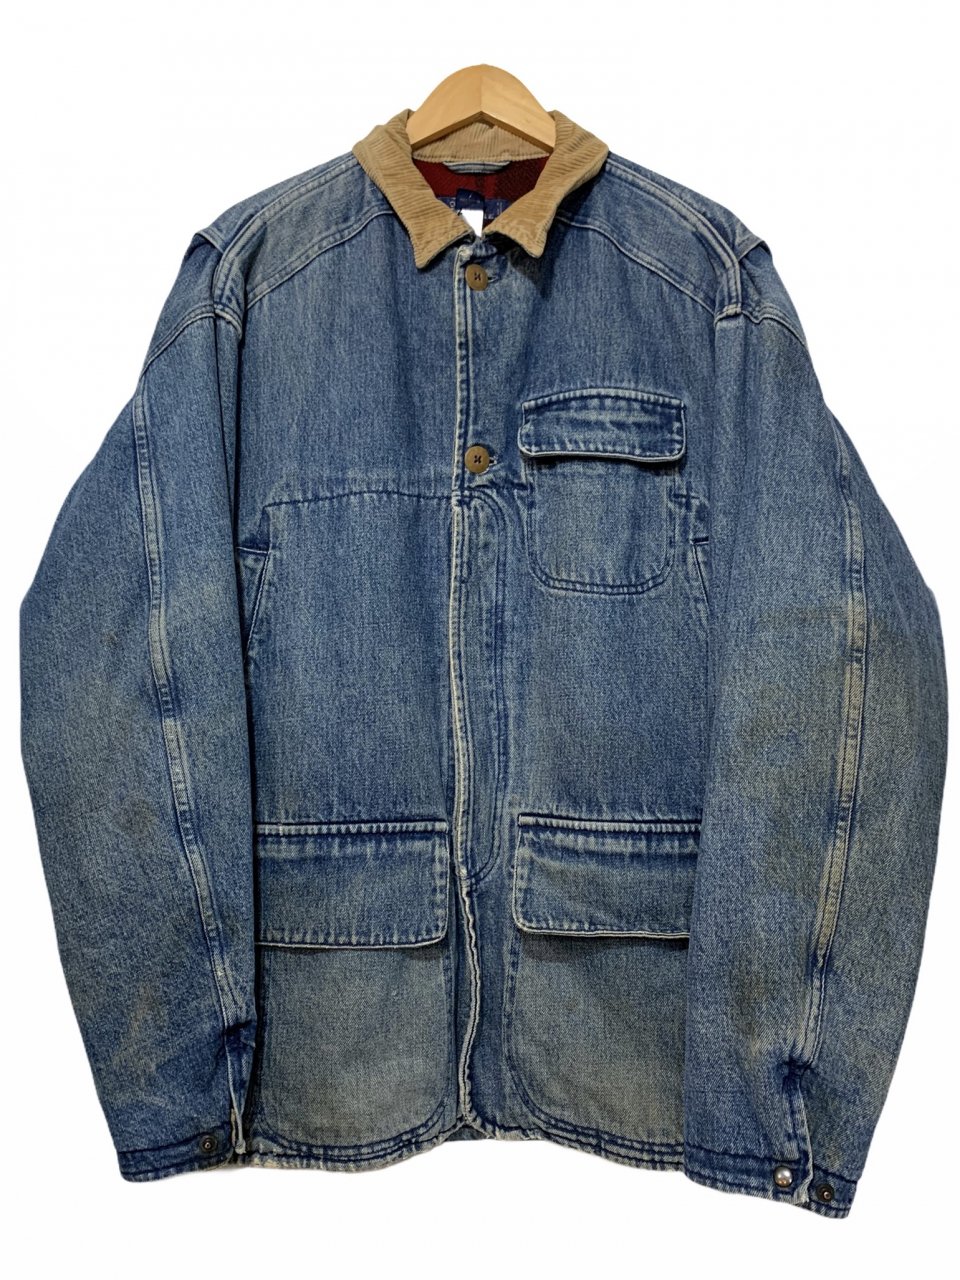 90s Polo Ralph Lauren Wool Lined Denim Hunting Jacket 青 L ポロ